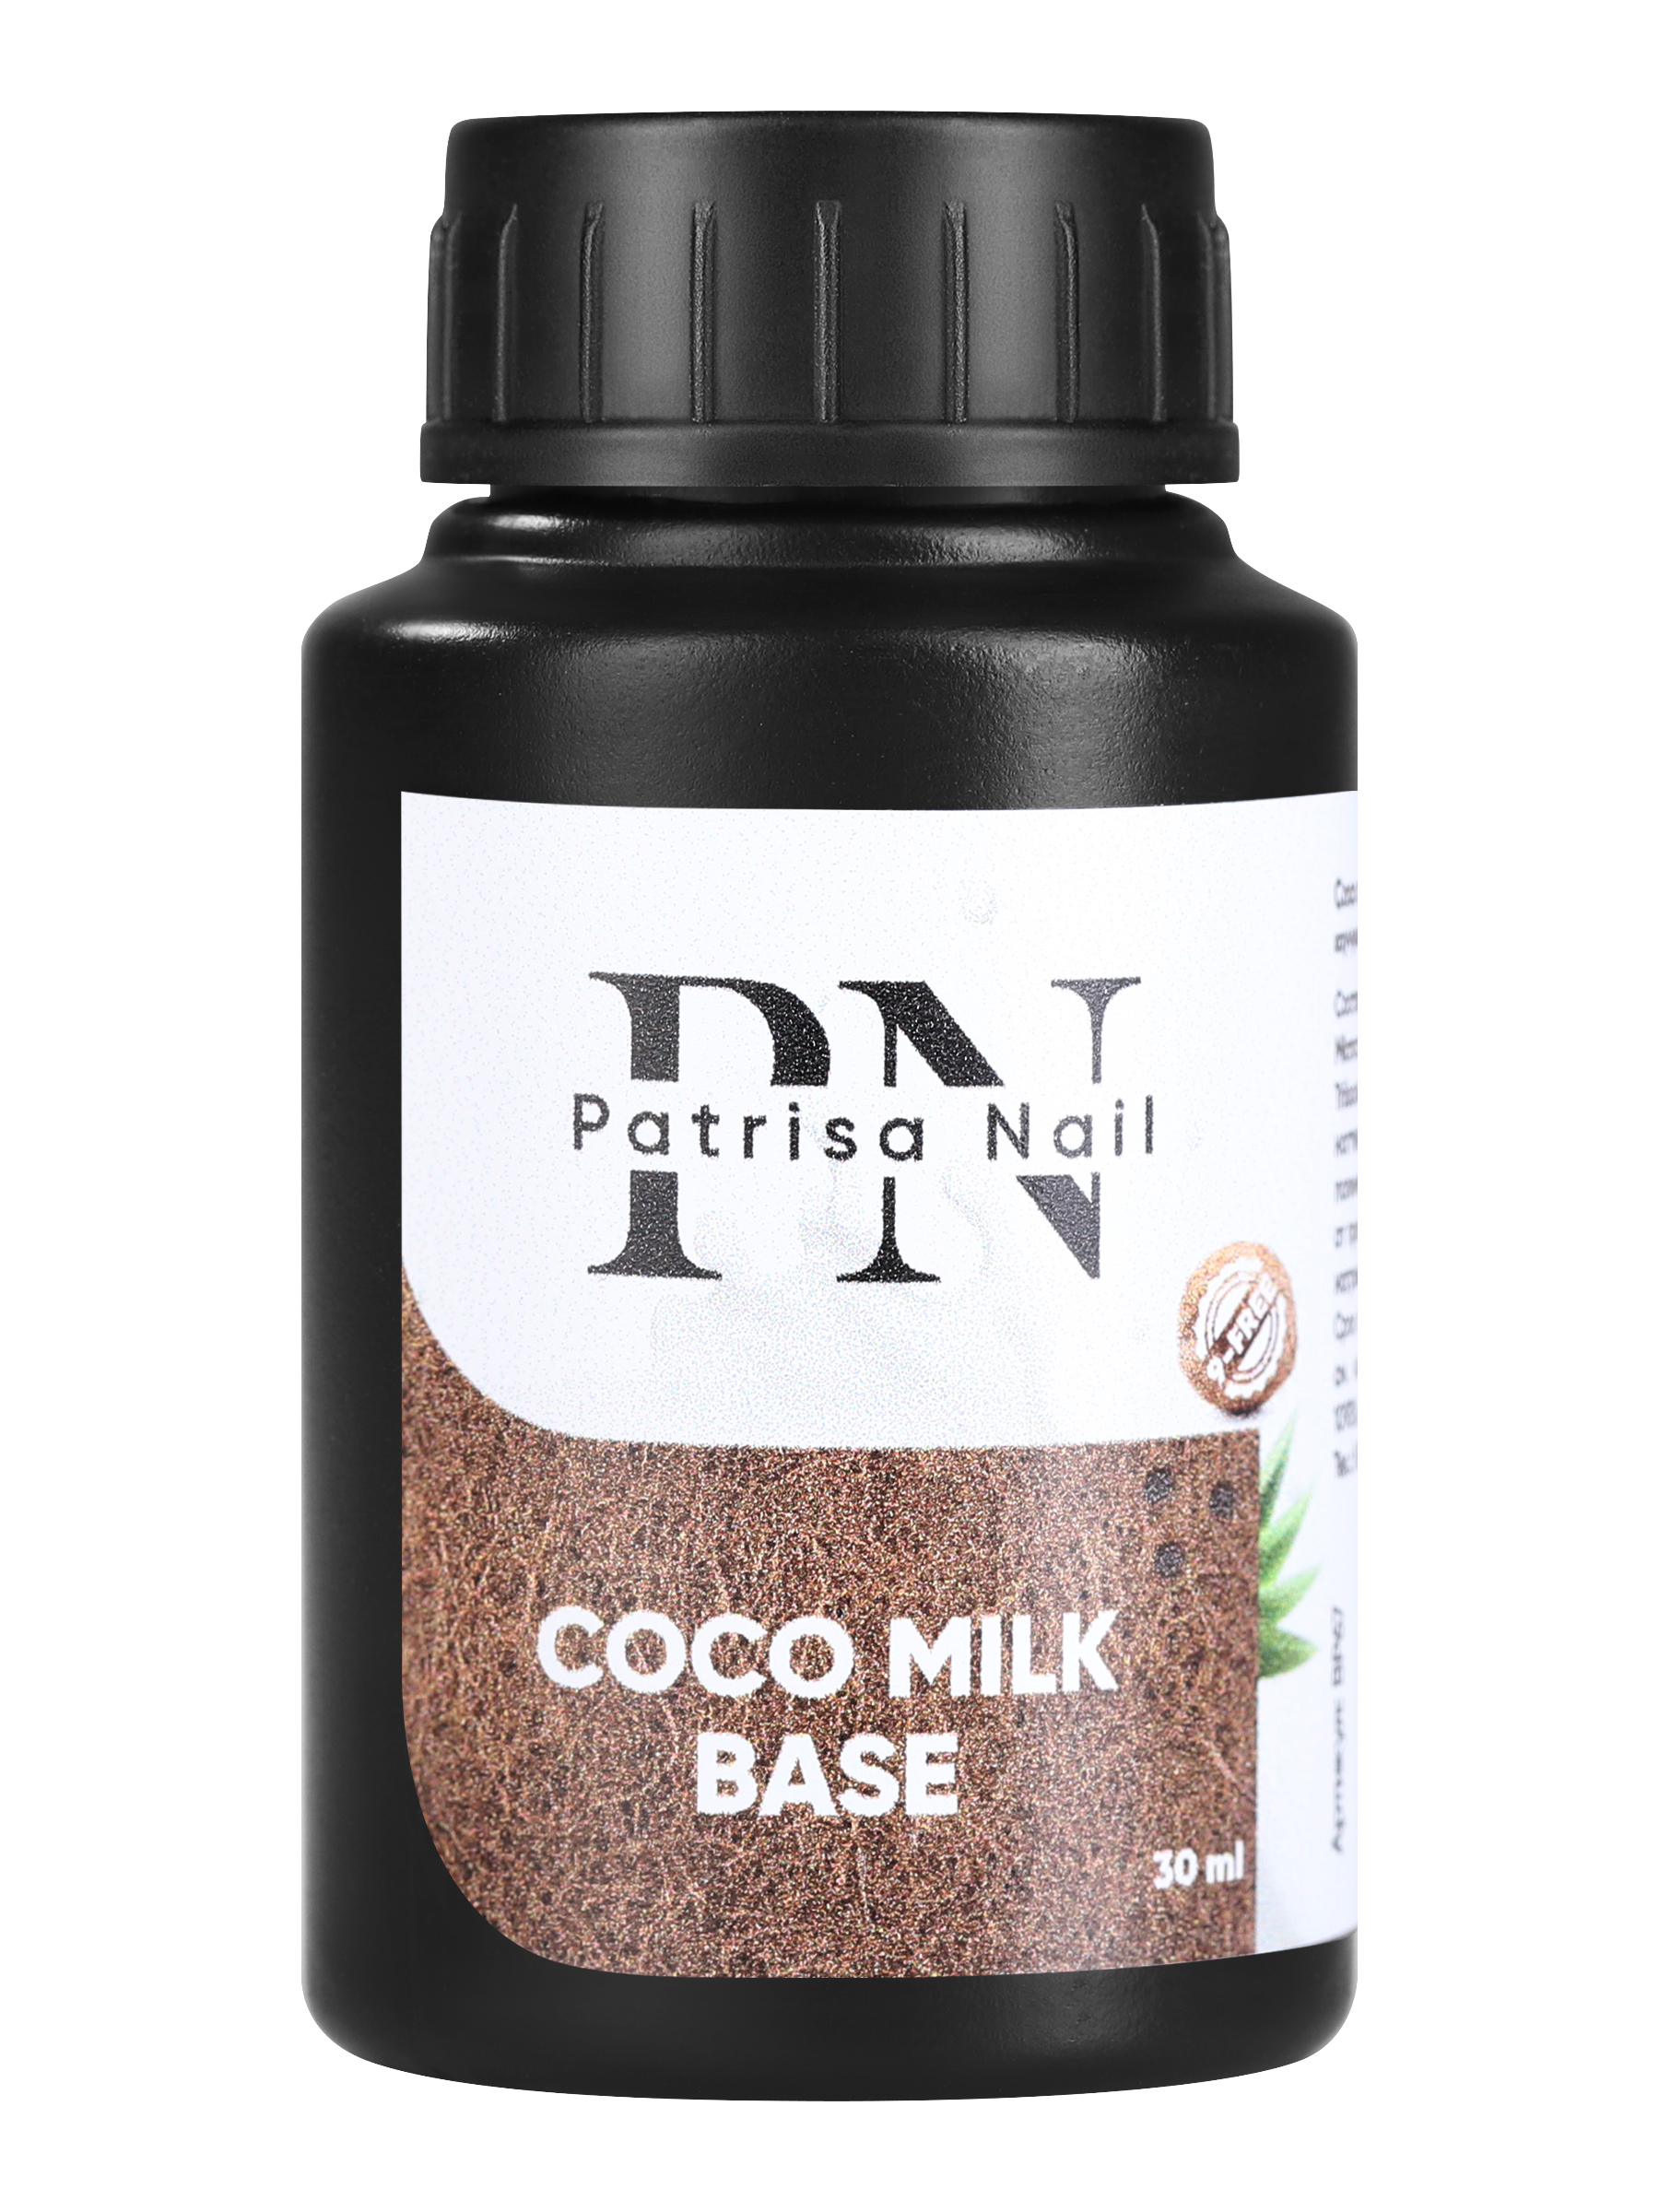 База для гель-лака Patrisa Nail Coco milk base камуфлирующая каучуковая молочная, 30 мл wula nailsoul база каучуковая камуфлирующая 08 перламутровый wula nailsoul 10 мл